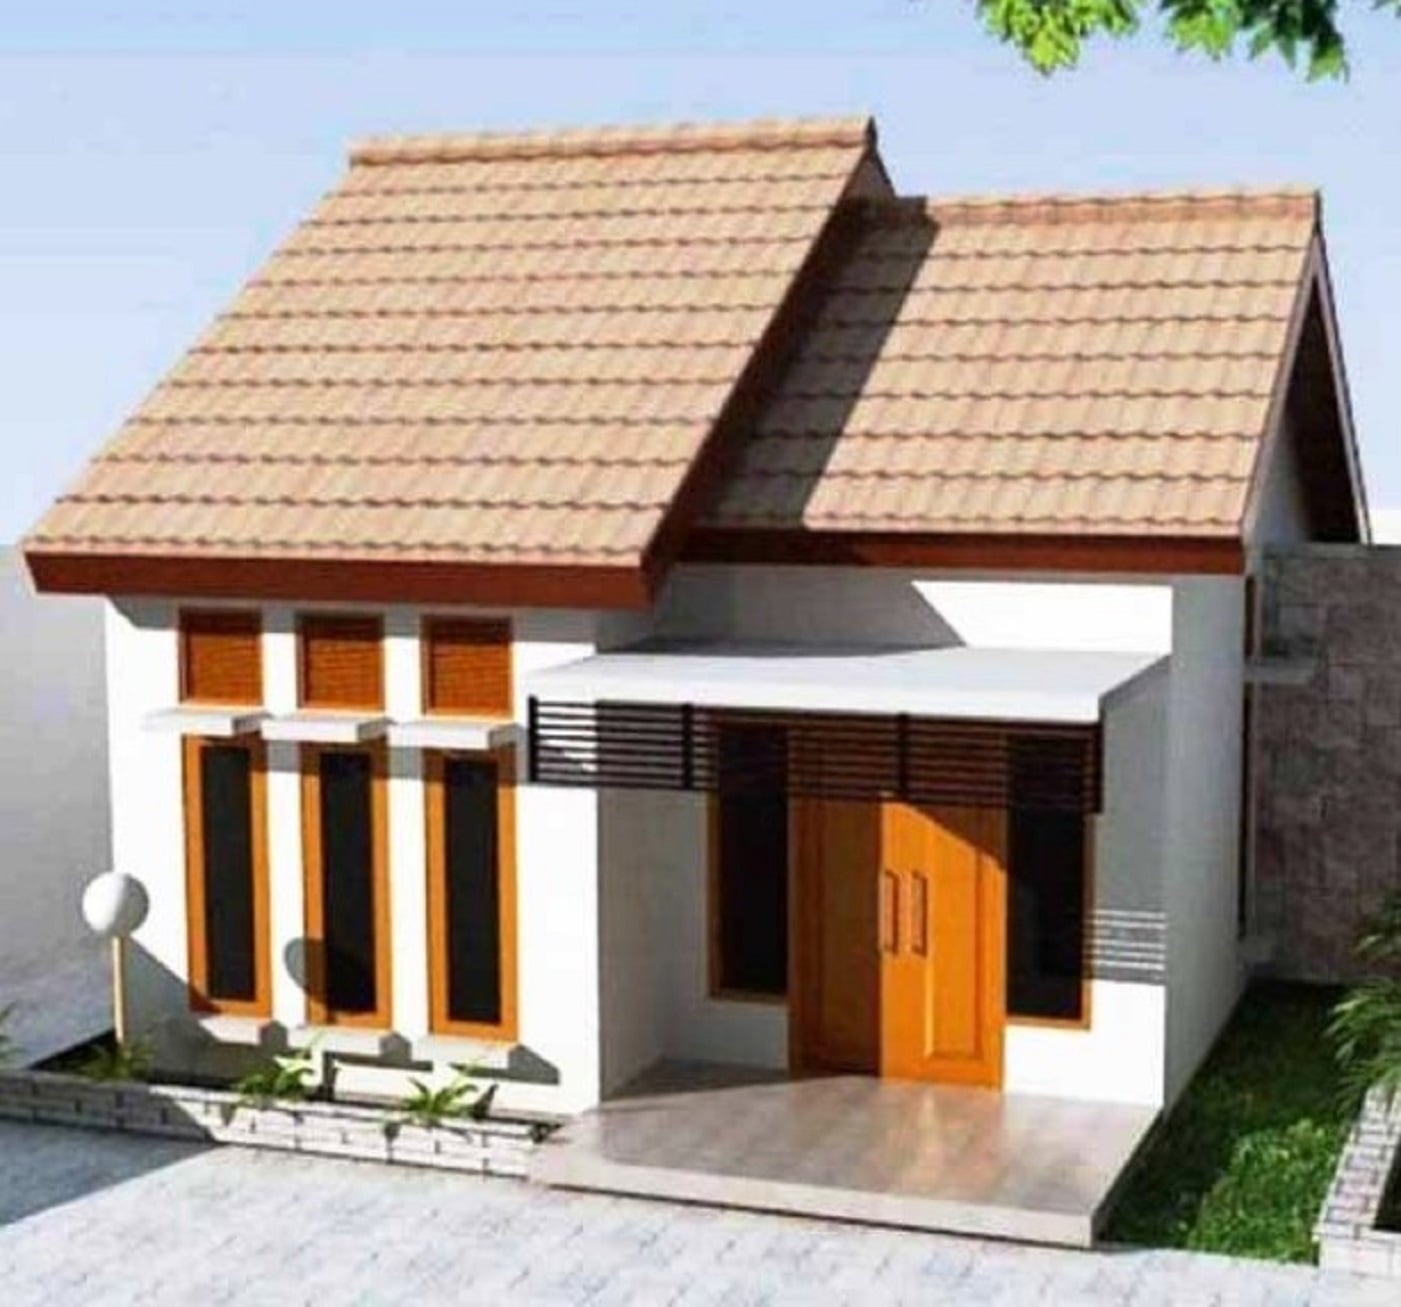 Desain Rumah Minimalis Sederhana Ukuran Kecil - Deagam Design